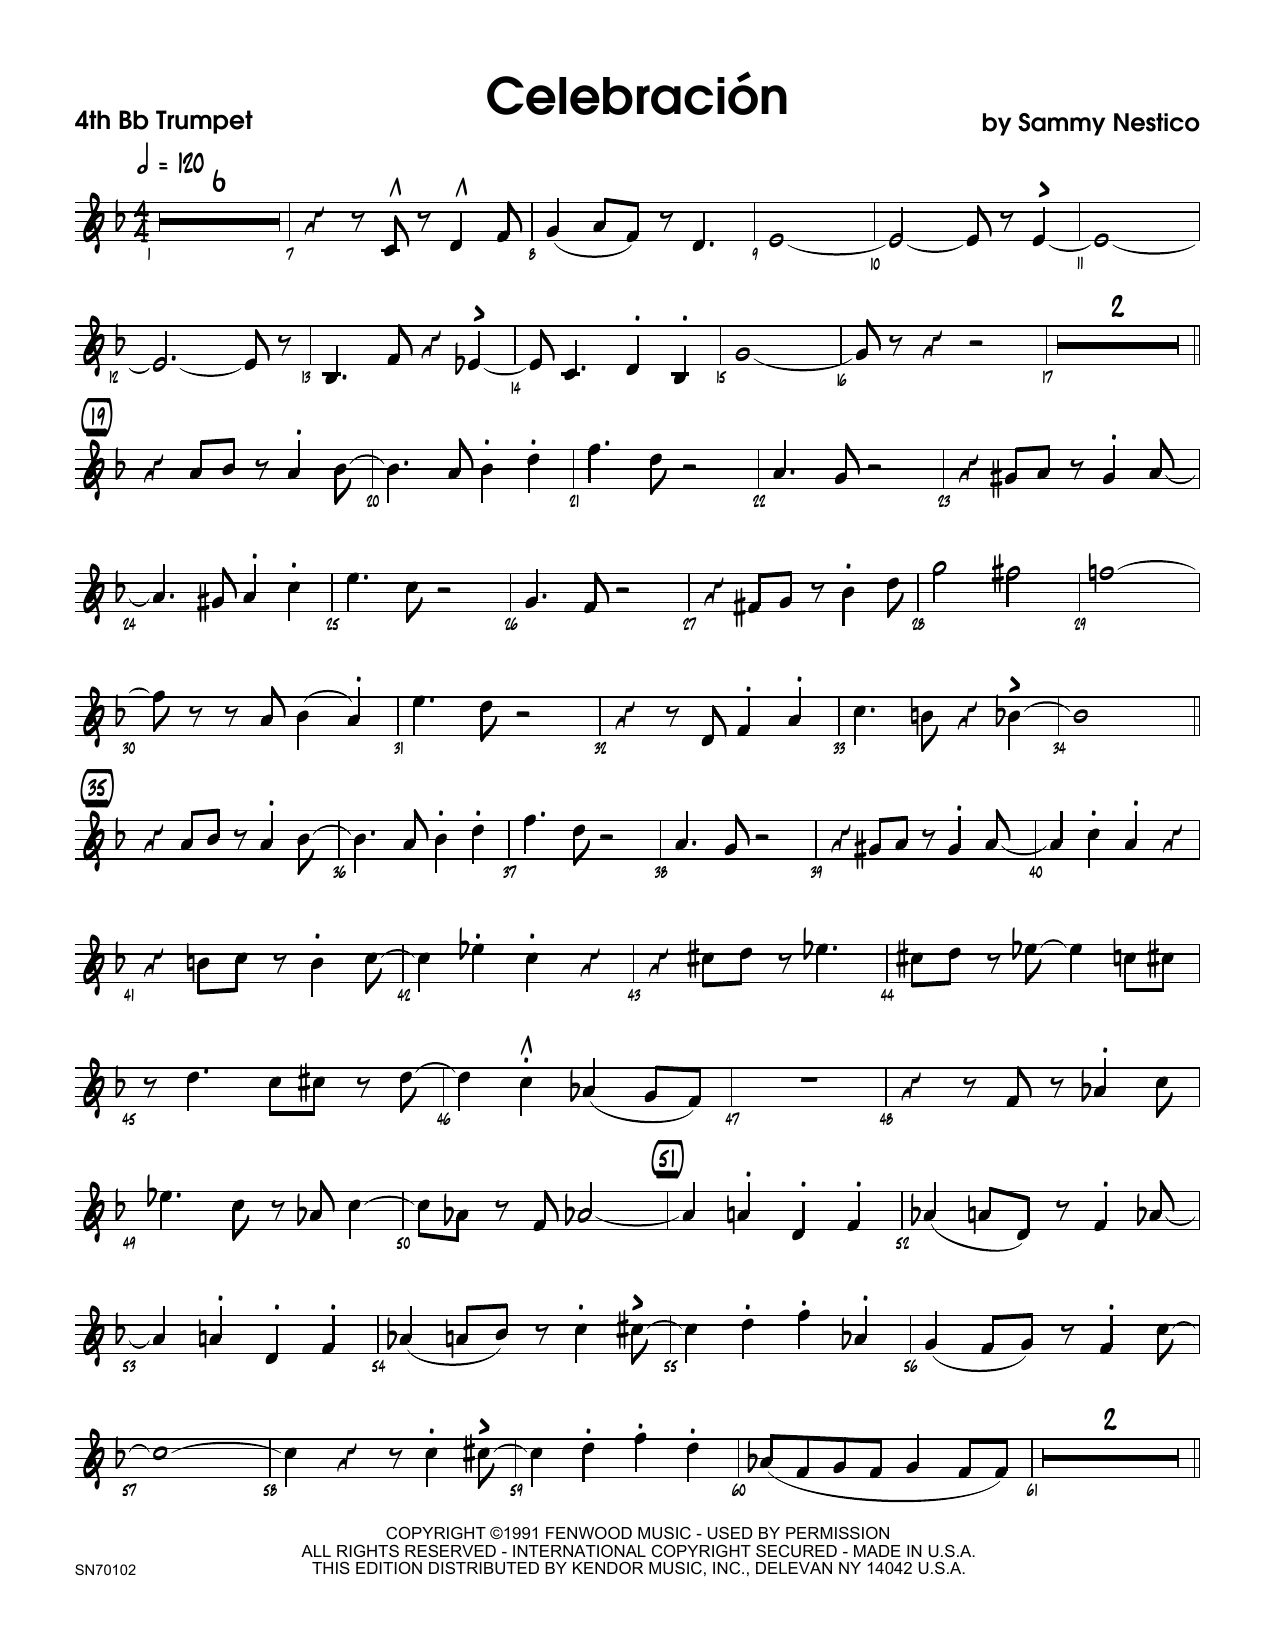 Download Sammy Nestico Celebracion - 4th Bb Trumpet Sheet Music